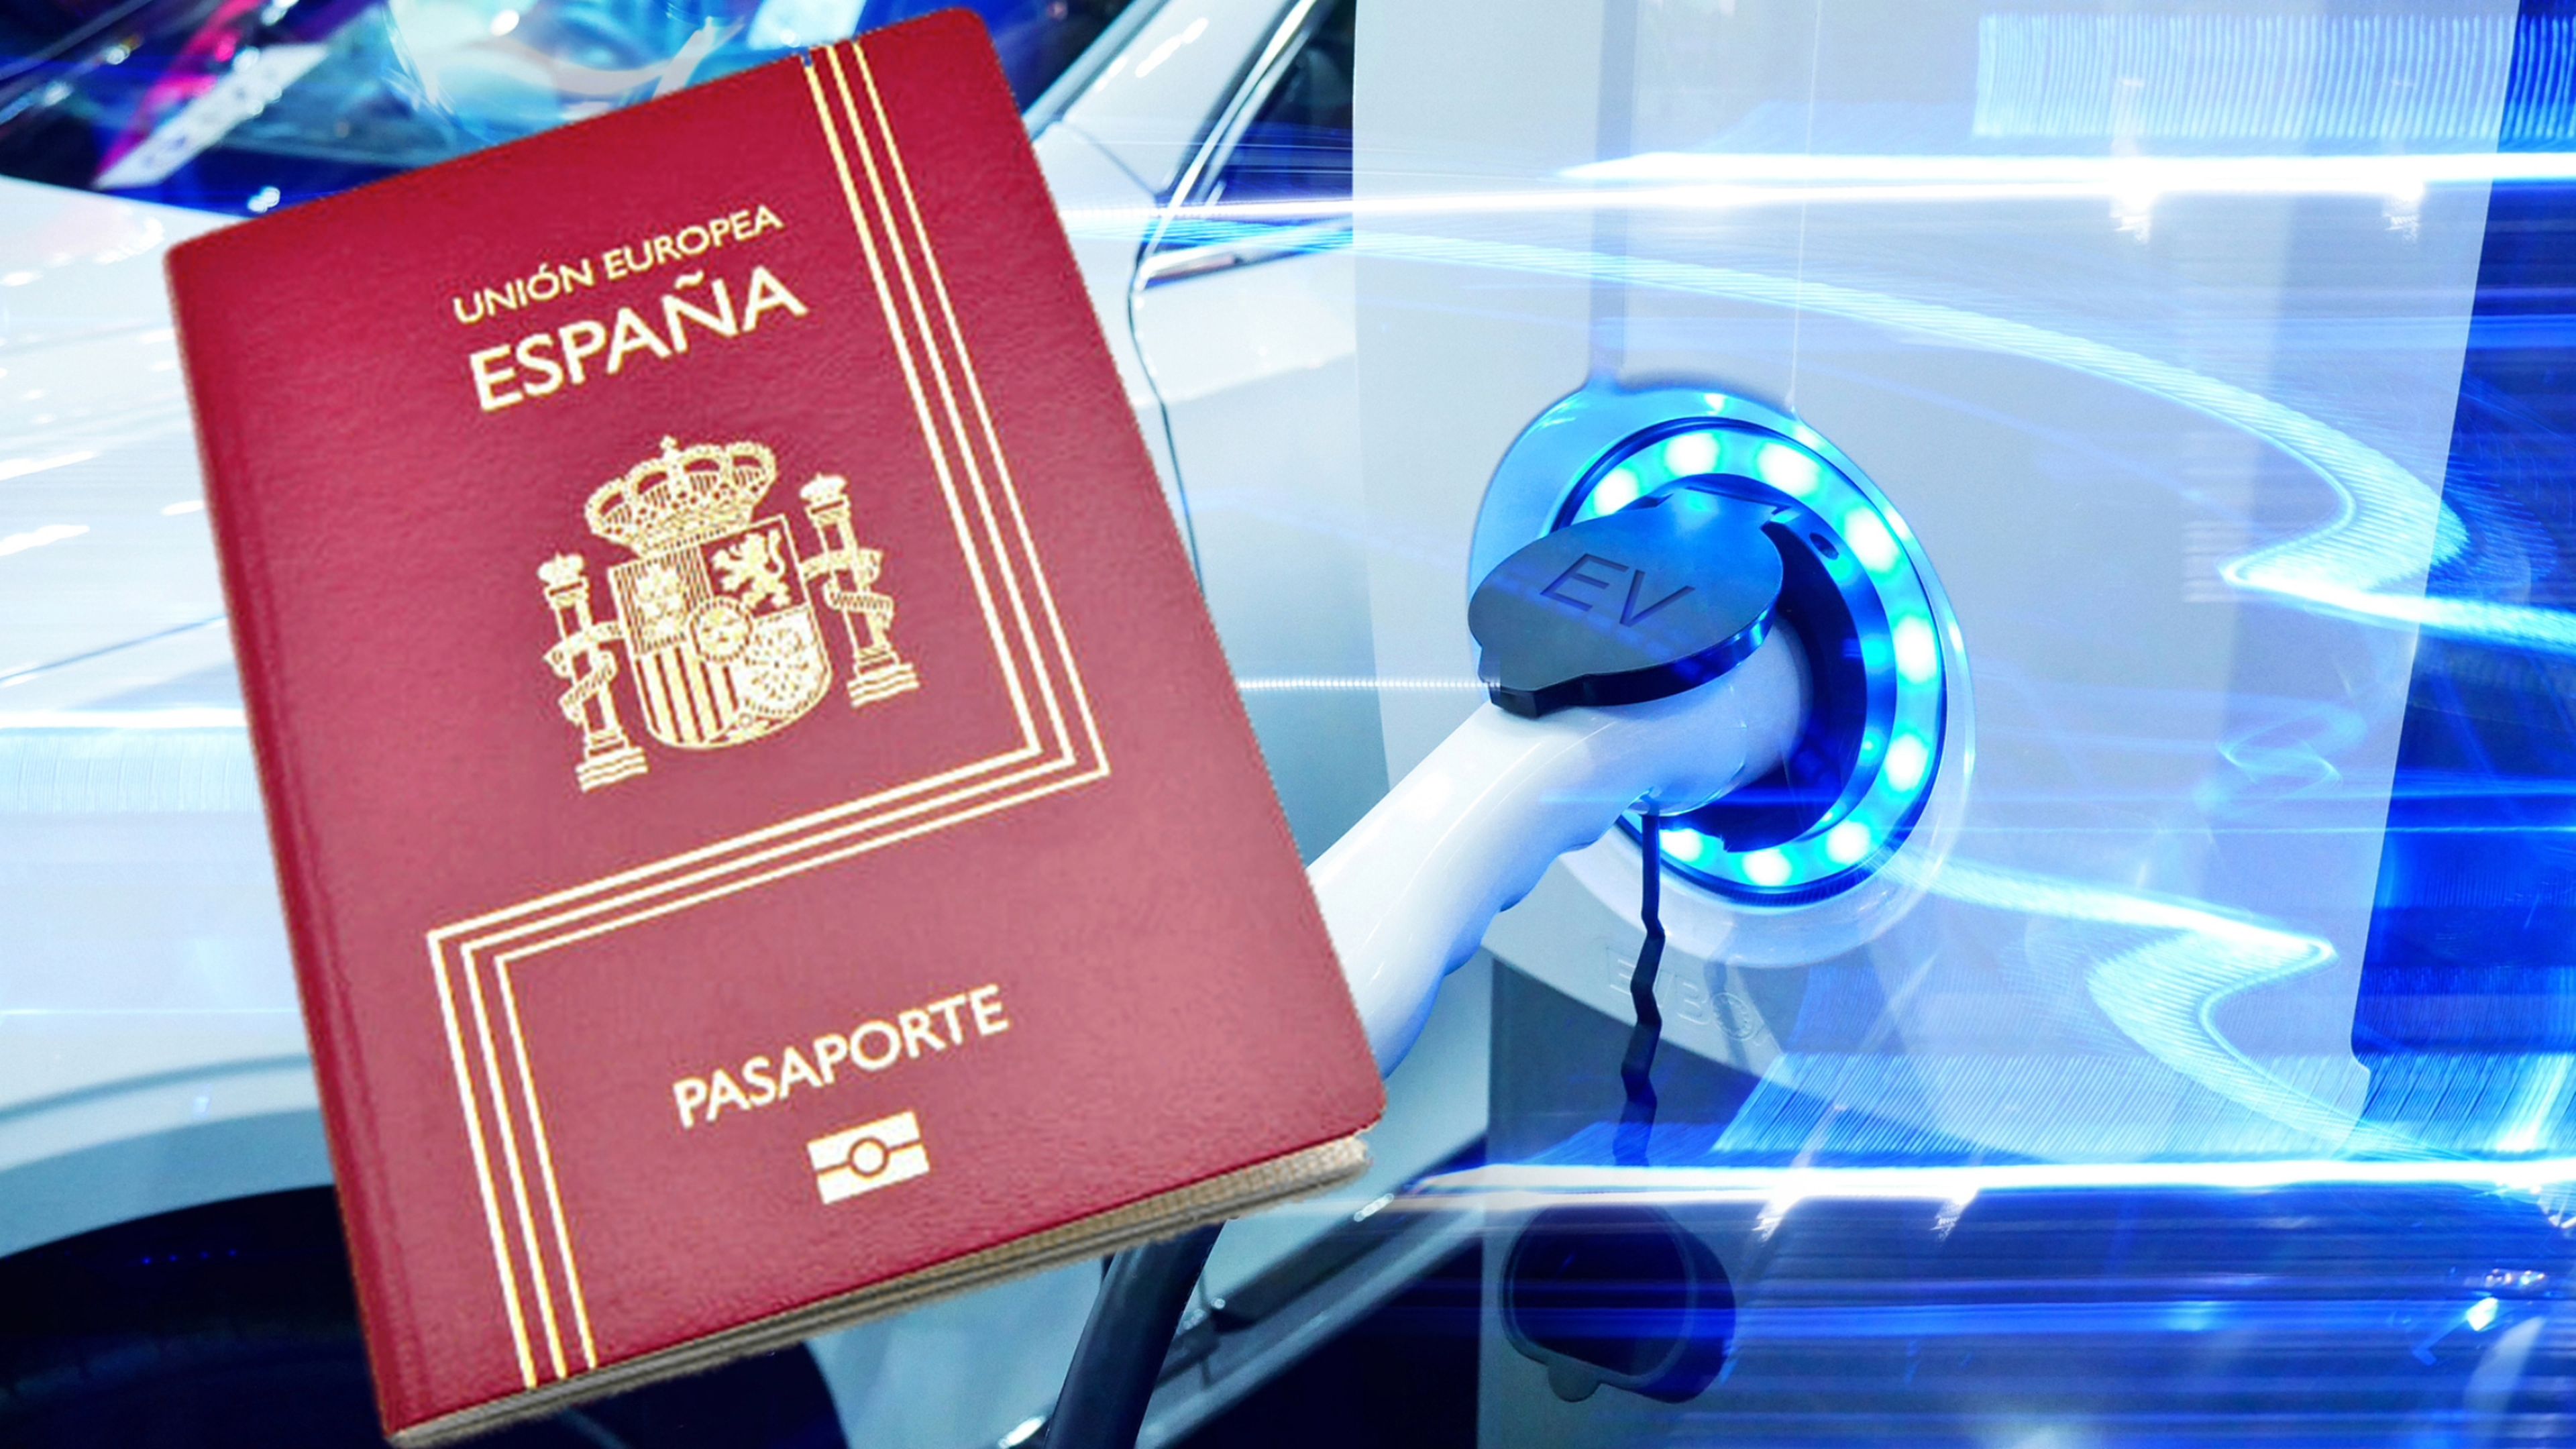 Coche eléctrico pasaporte UE